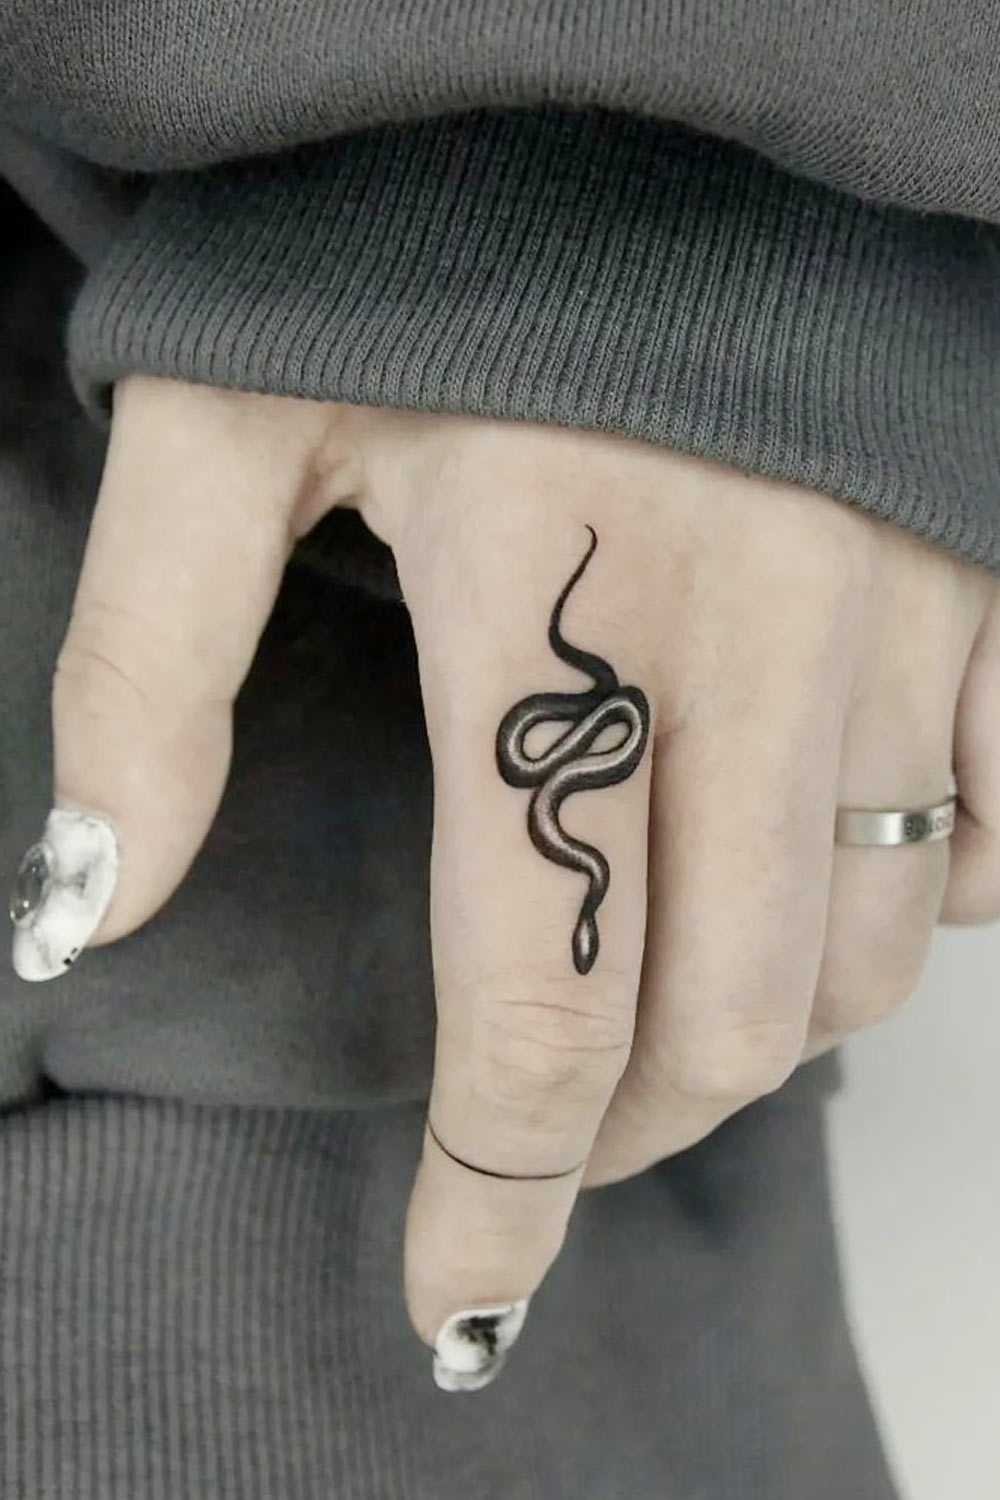 97 Striking Snake Tattoos for Women (+ Bold Meanings) - Tattoo Glee